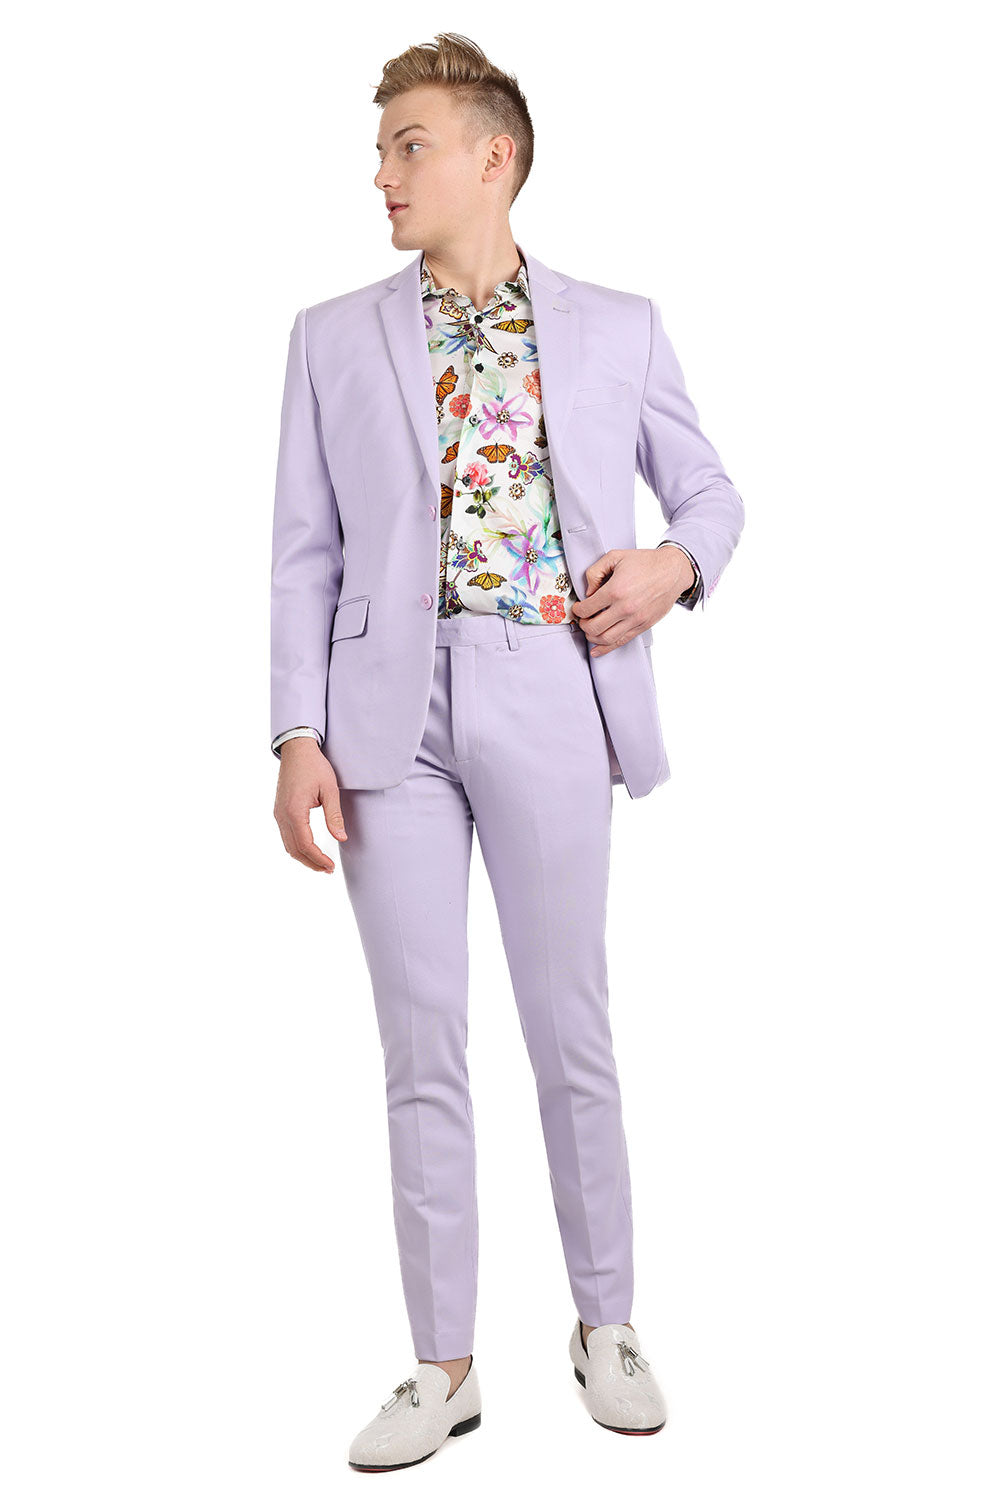 BARABAS Men's Brushed Cotton Notched Lapel Matt Suit 3SU02 Fuchsia Lavender